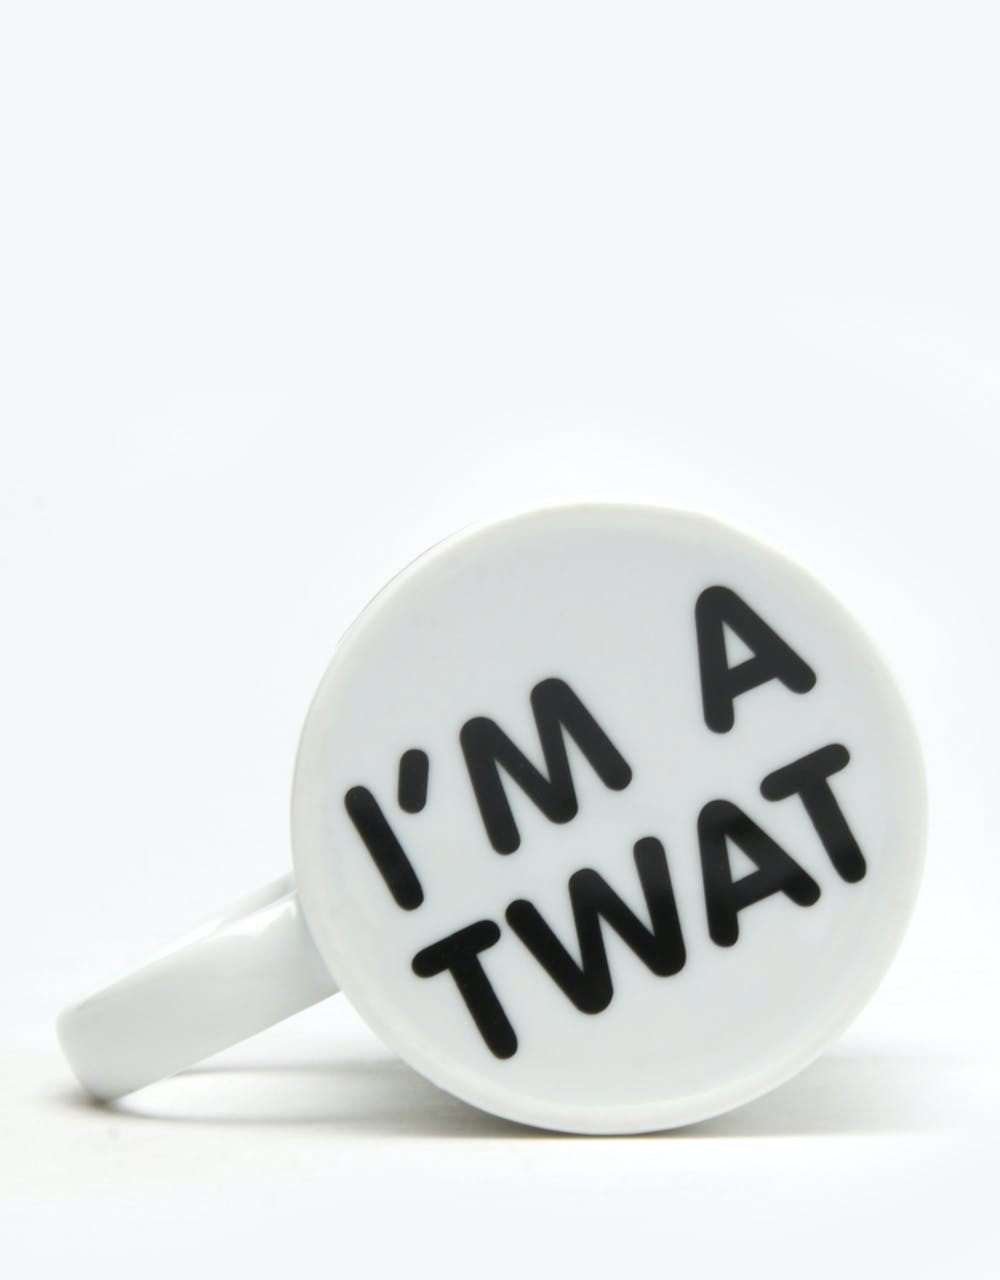 Twat Mug